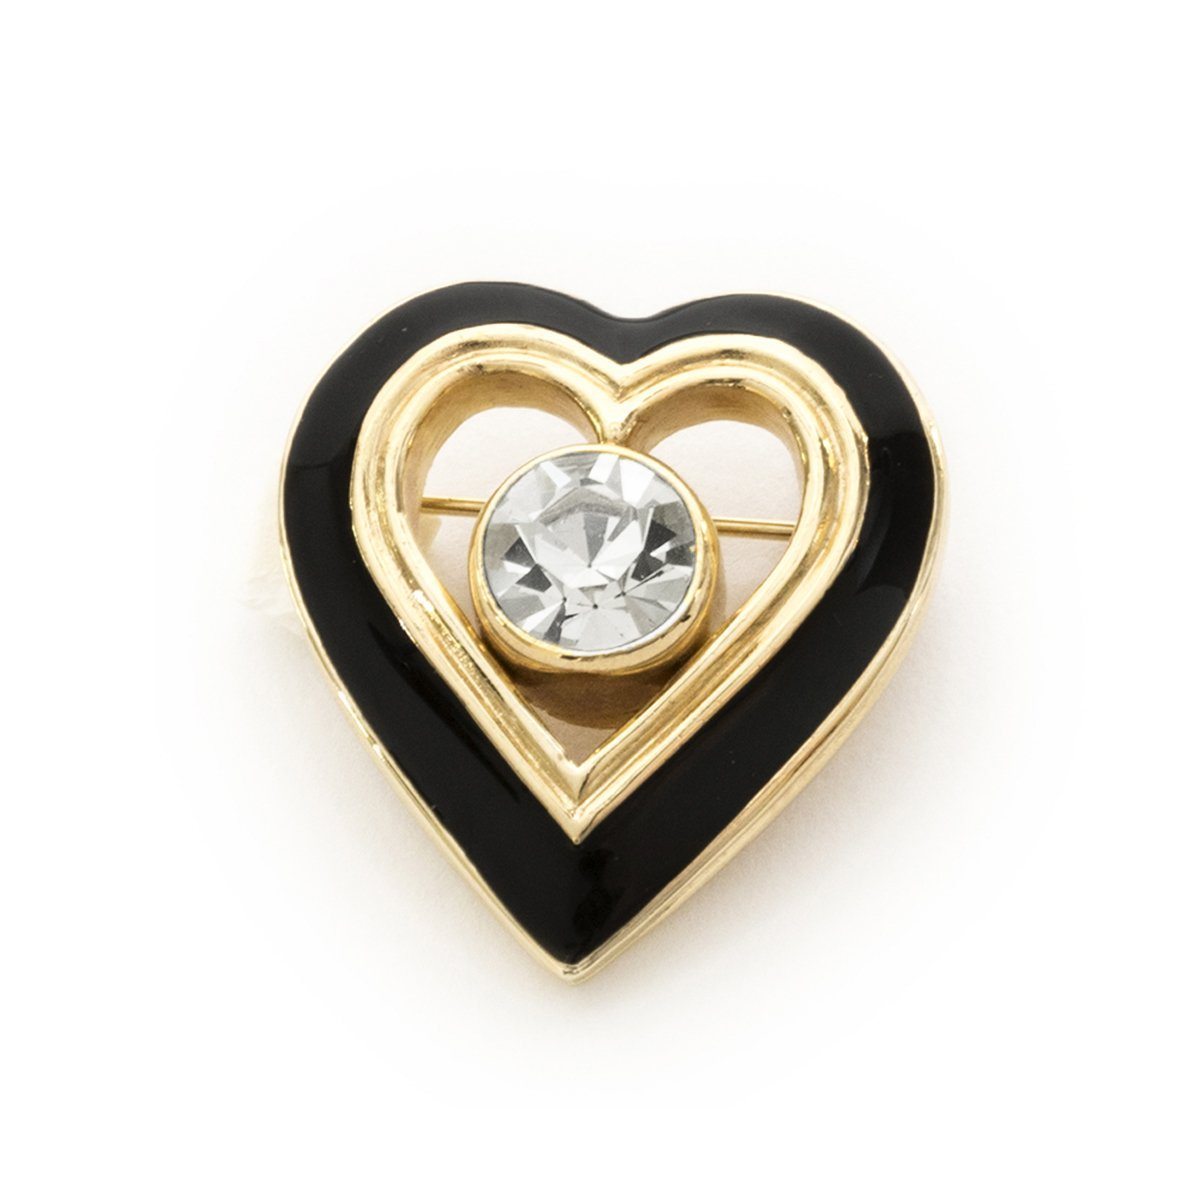 Vintage Christian Dior Heart brooch